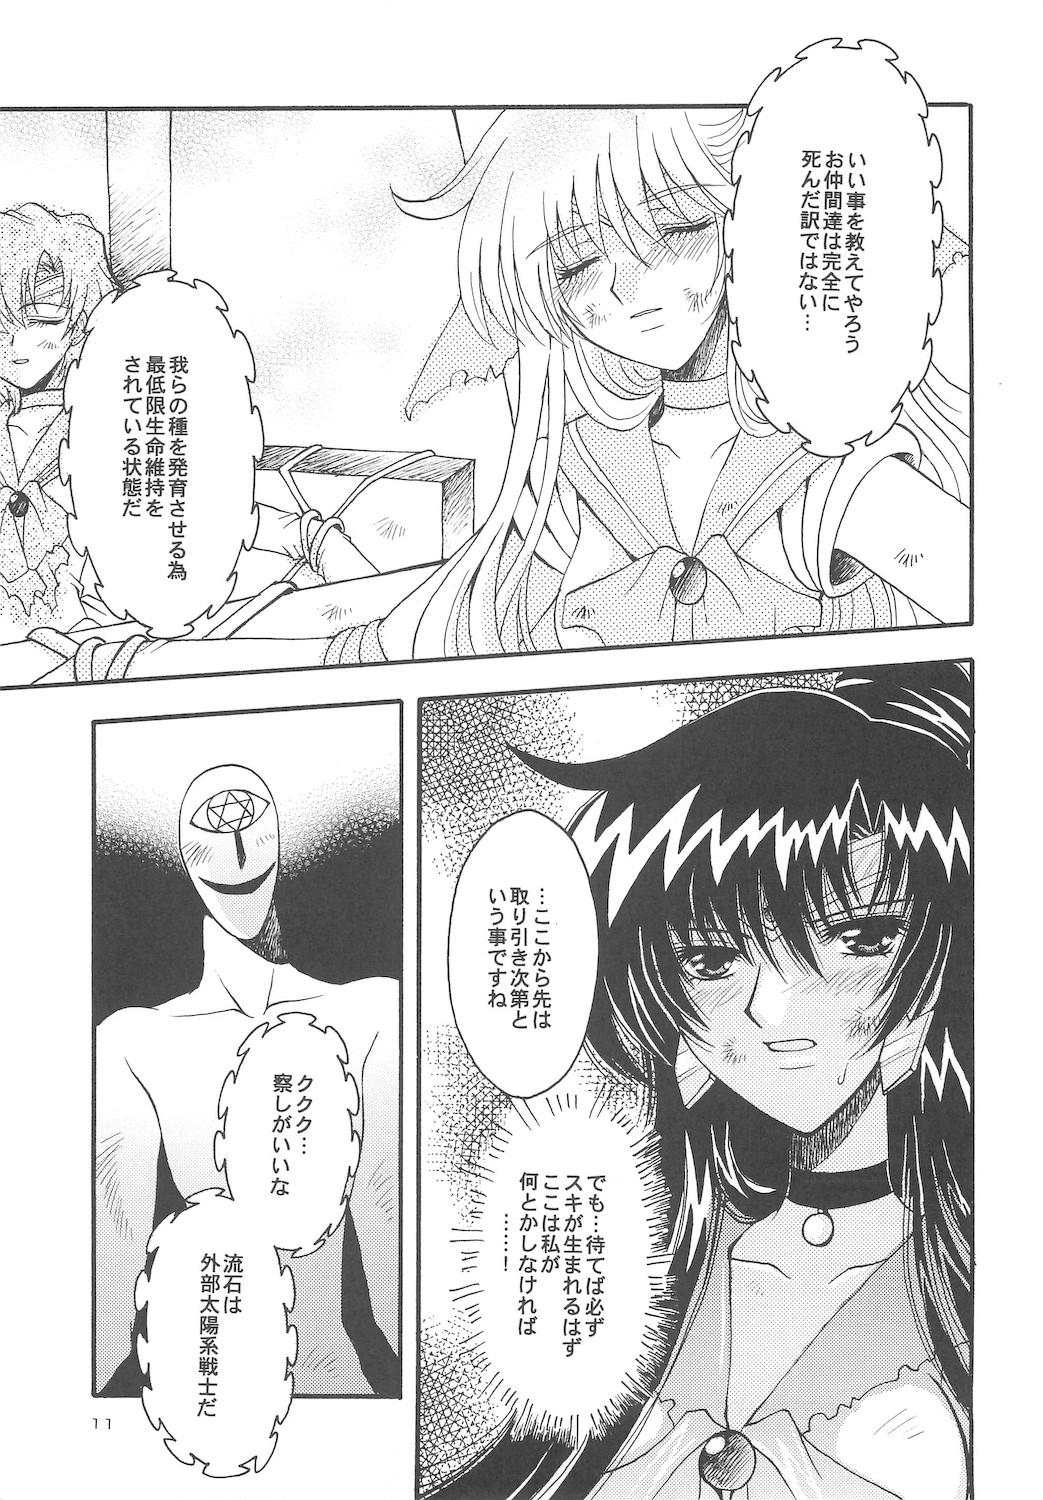 Spread Owaru Sekai dai 4 shou - Sailor moon Studs - Page 11